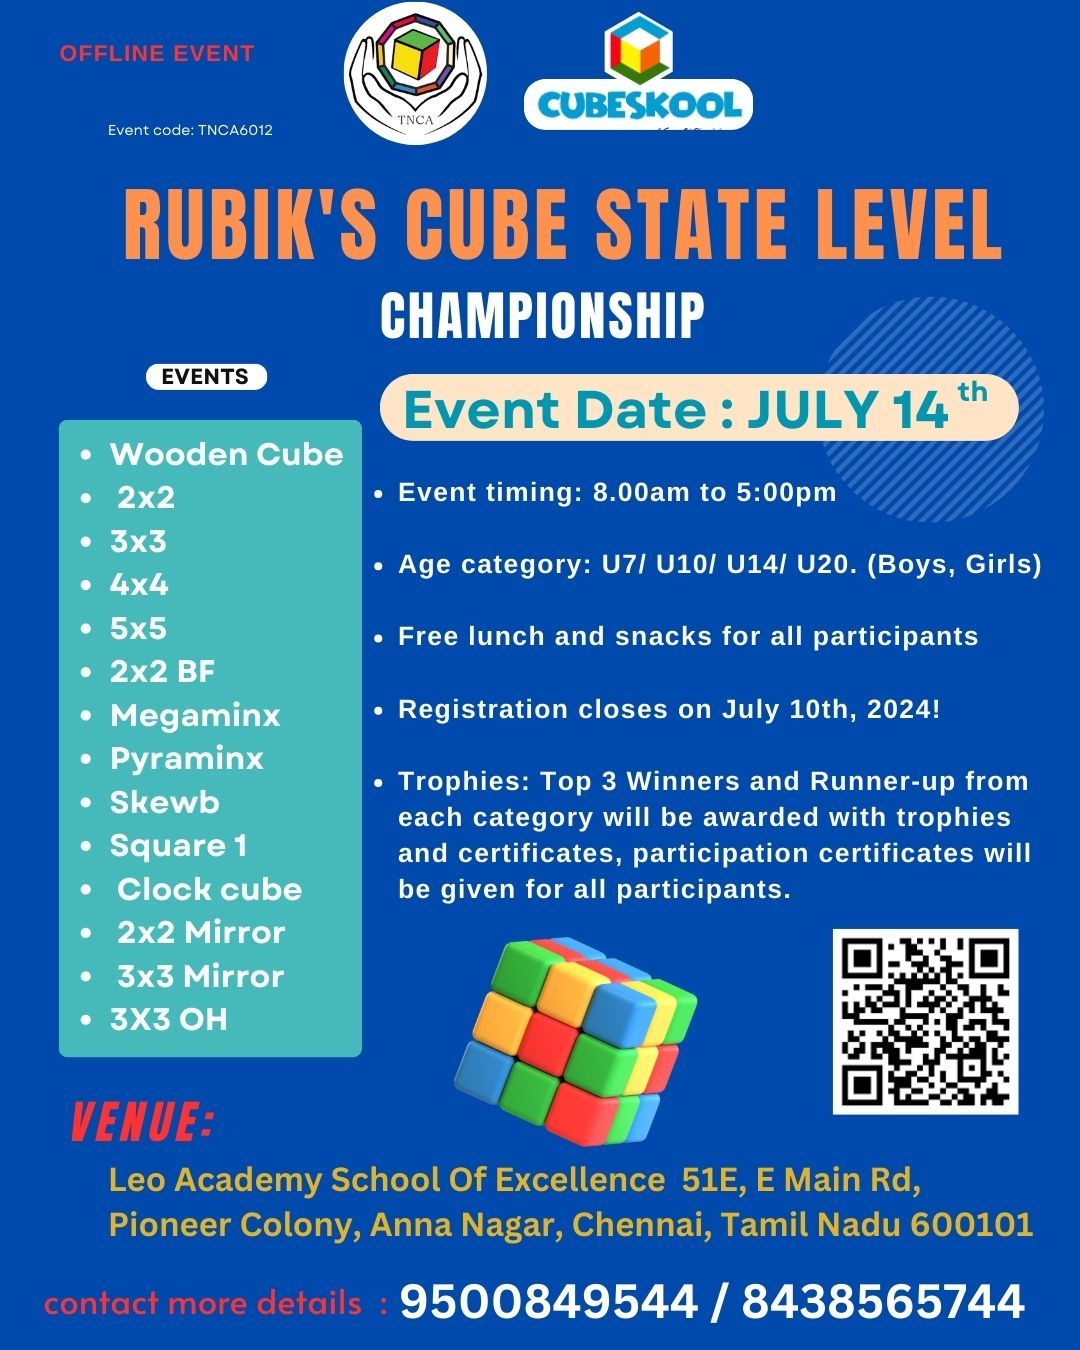 Rubik's Cube STATE LEVEL CHAMPIONSHIP